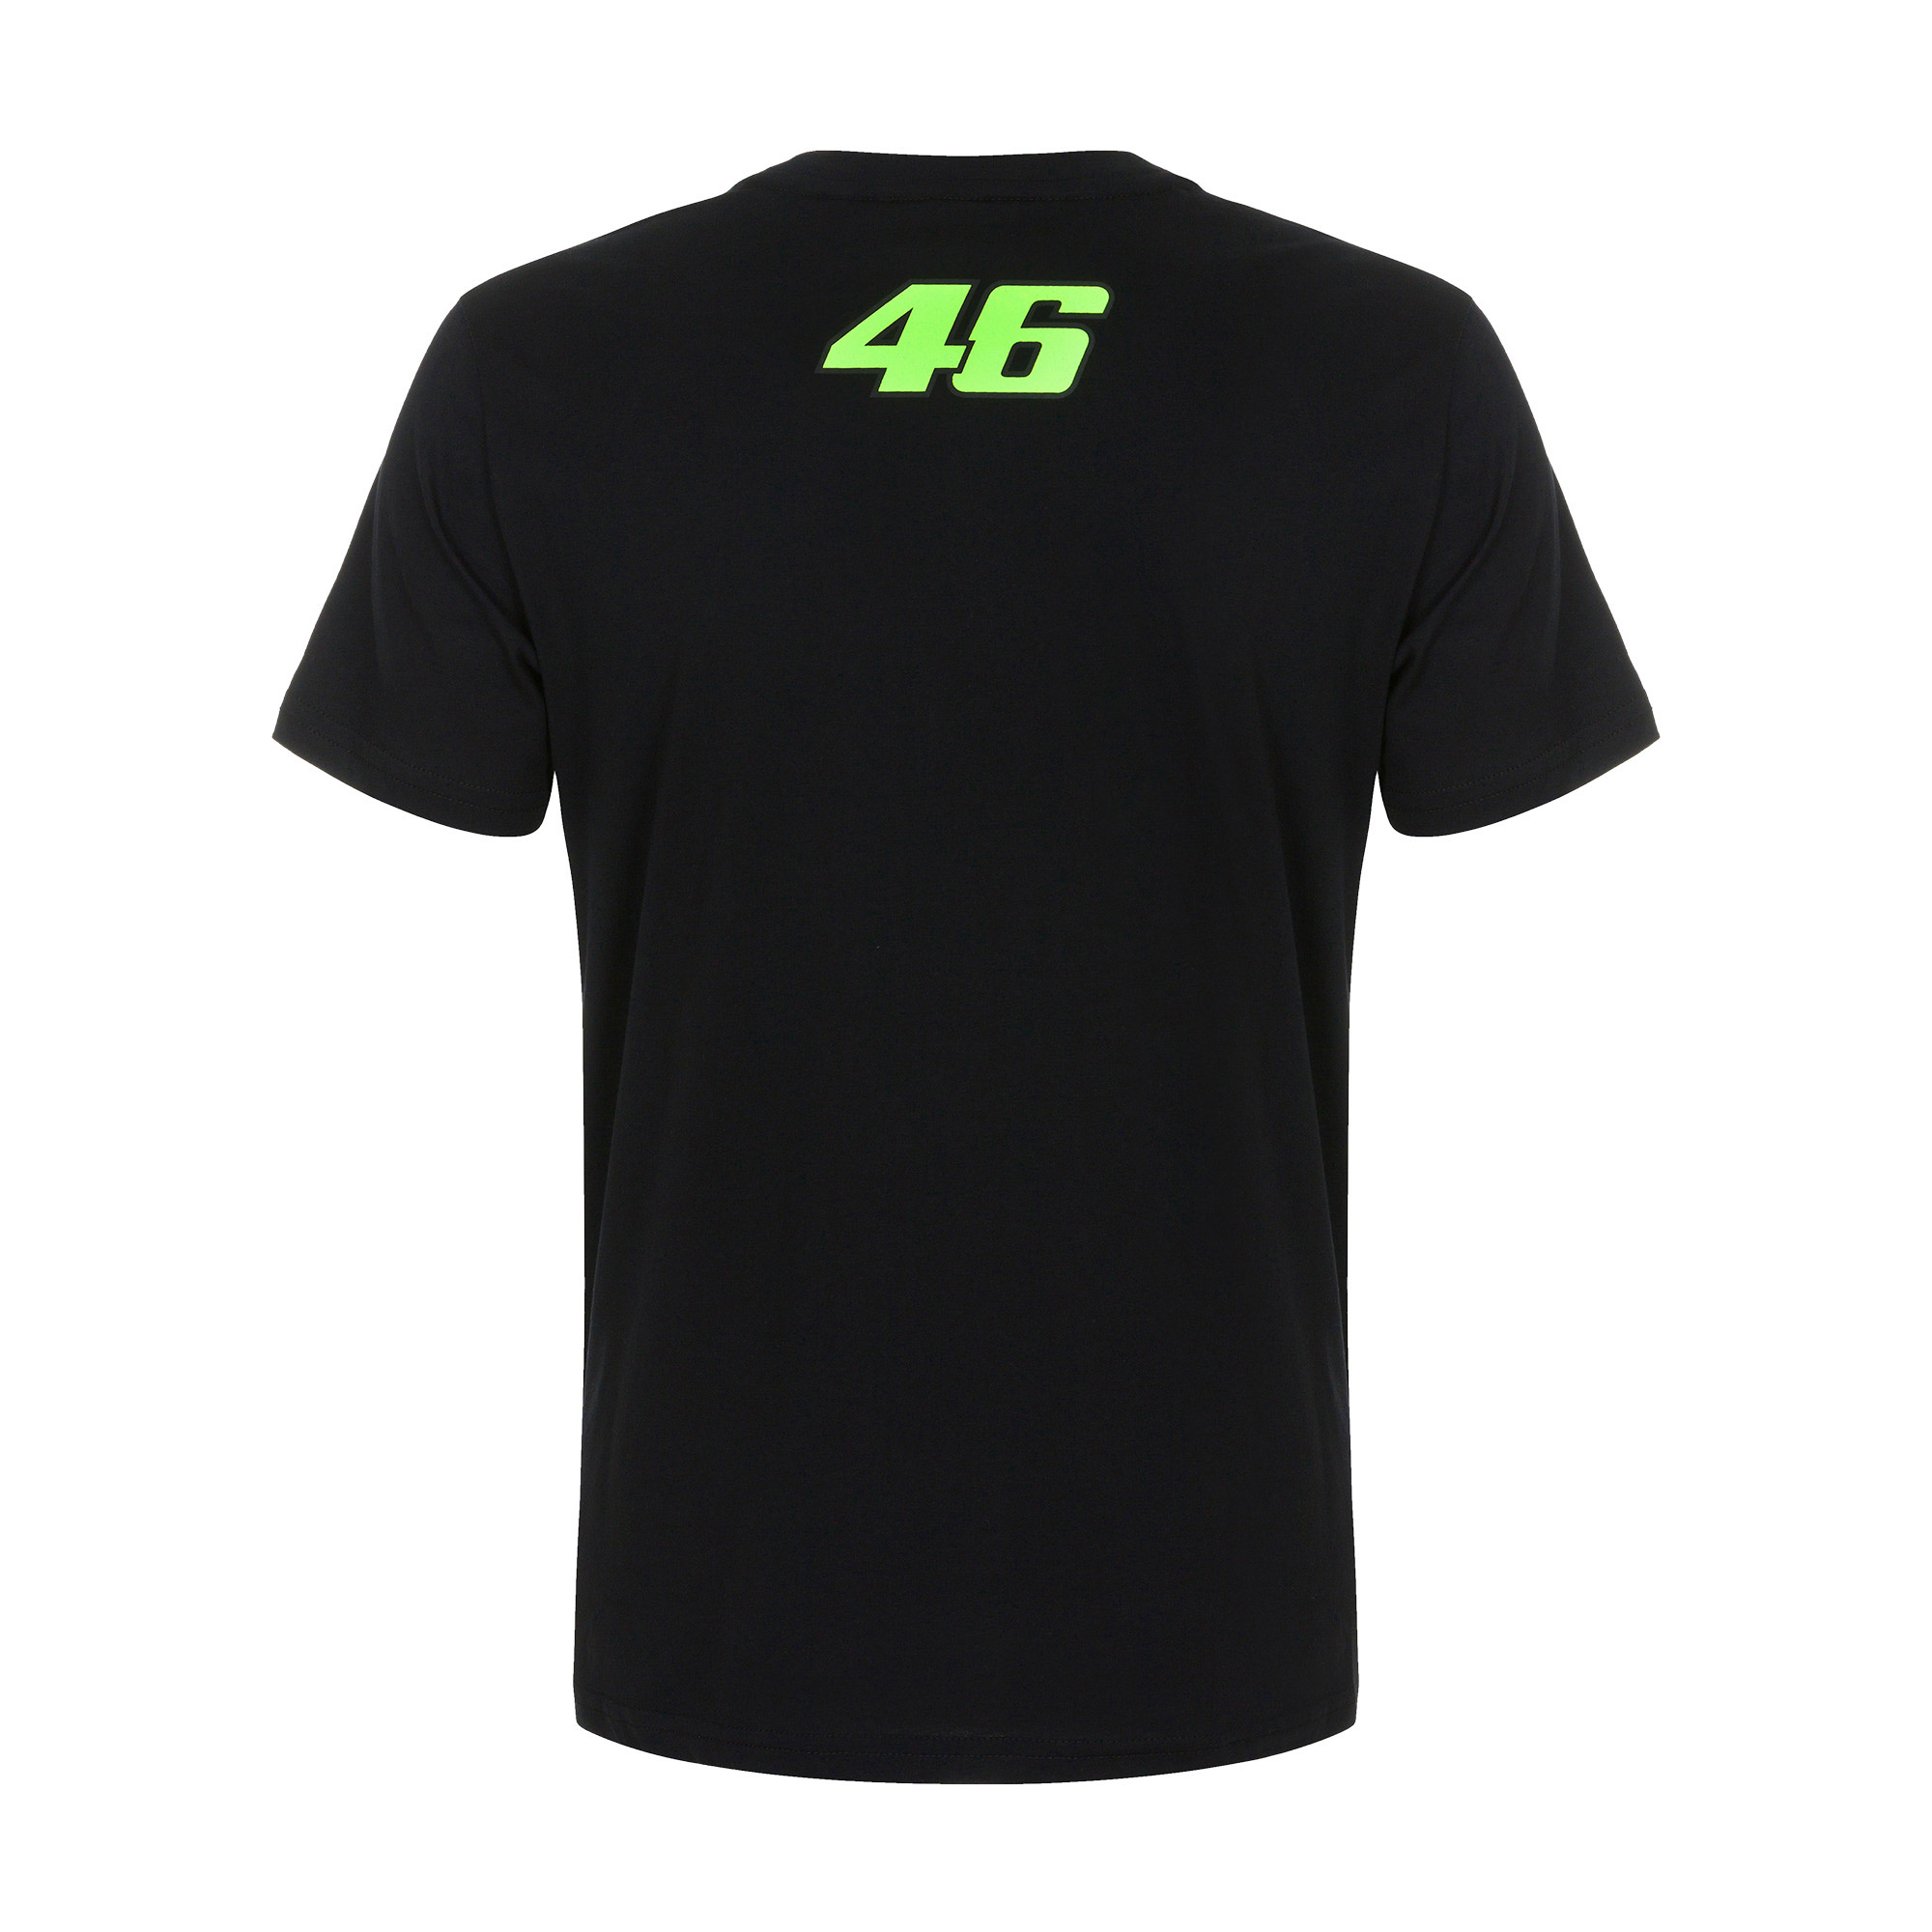 Valentino Rossi T-Shirt "46 The Doctor" - schwarz